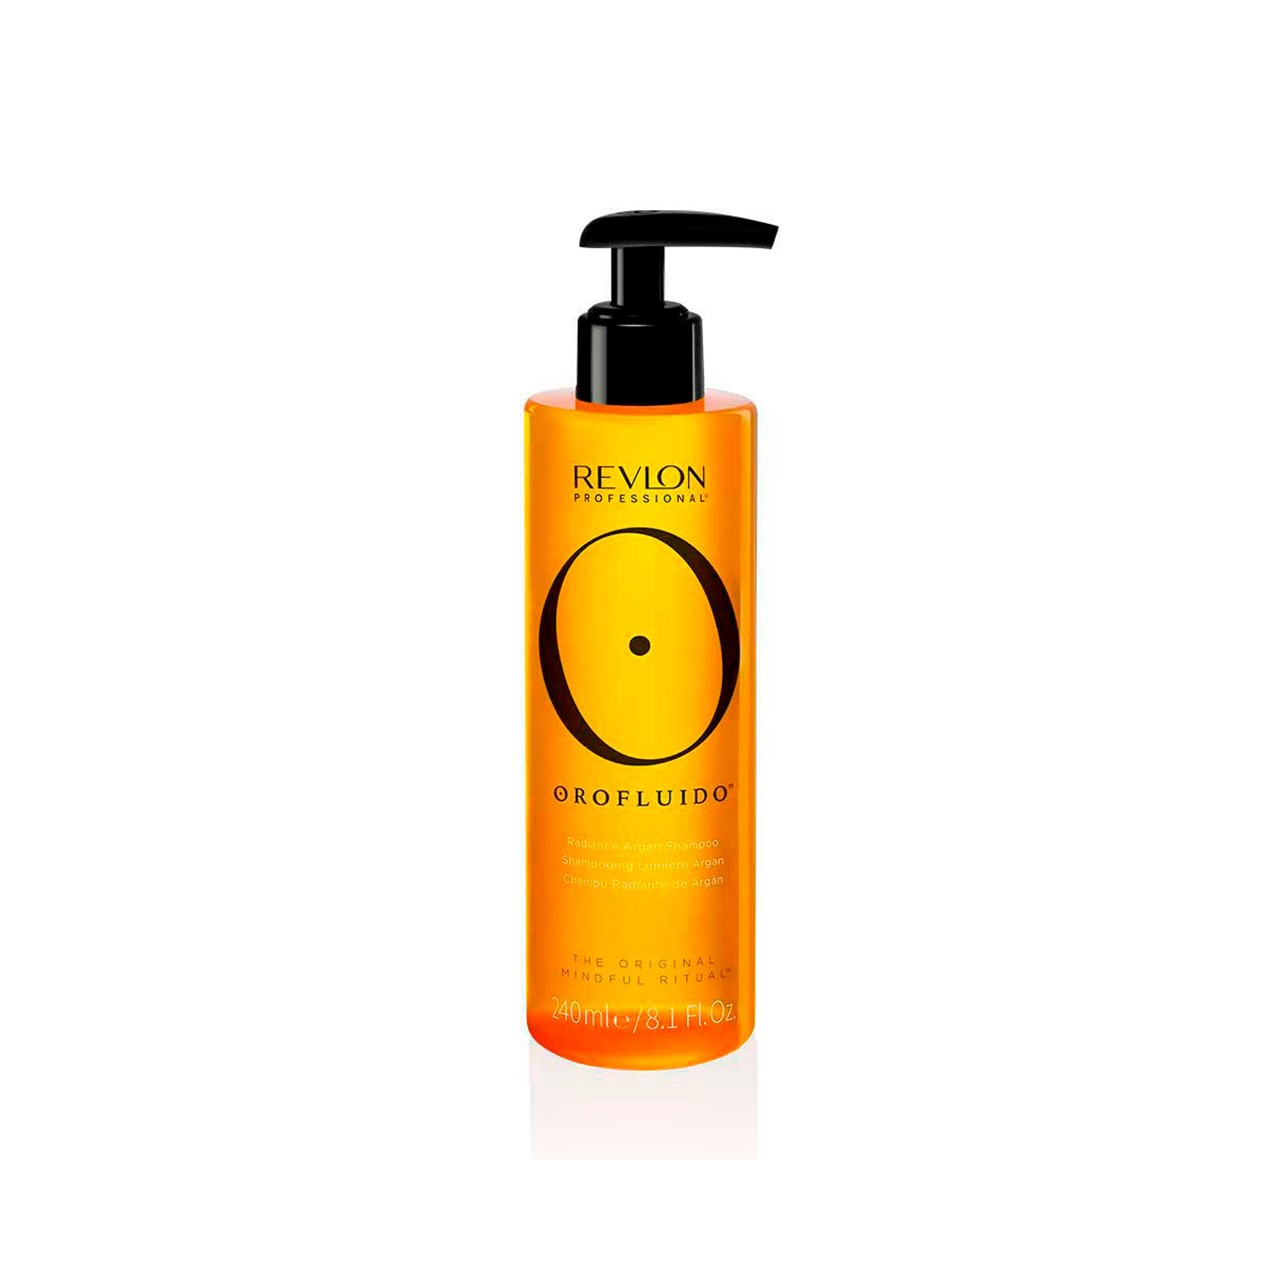 Revlon Professional Orofluido Radiance Argan Shampoo 240ml (8.12fl oz)